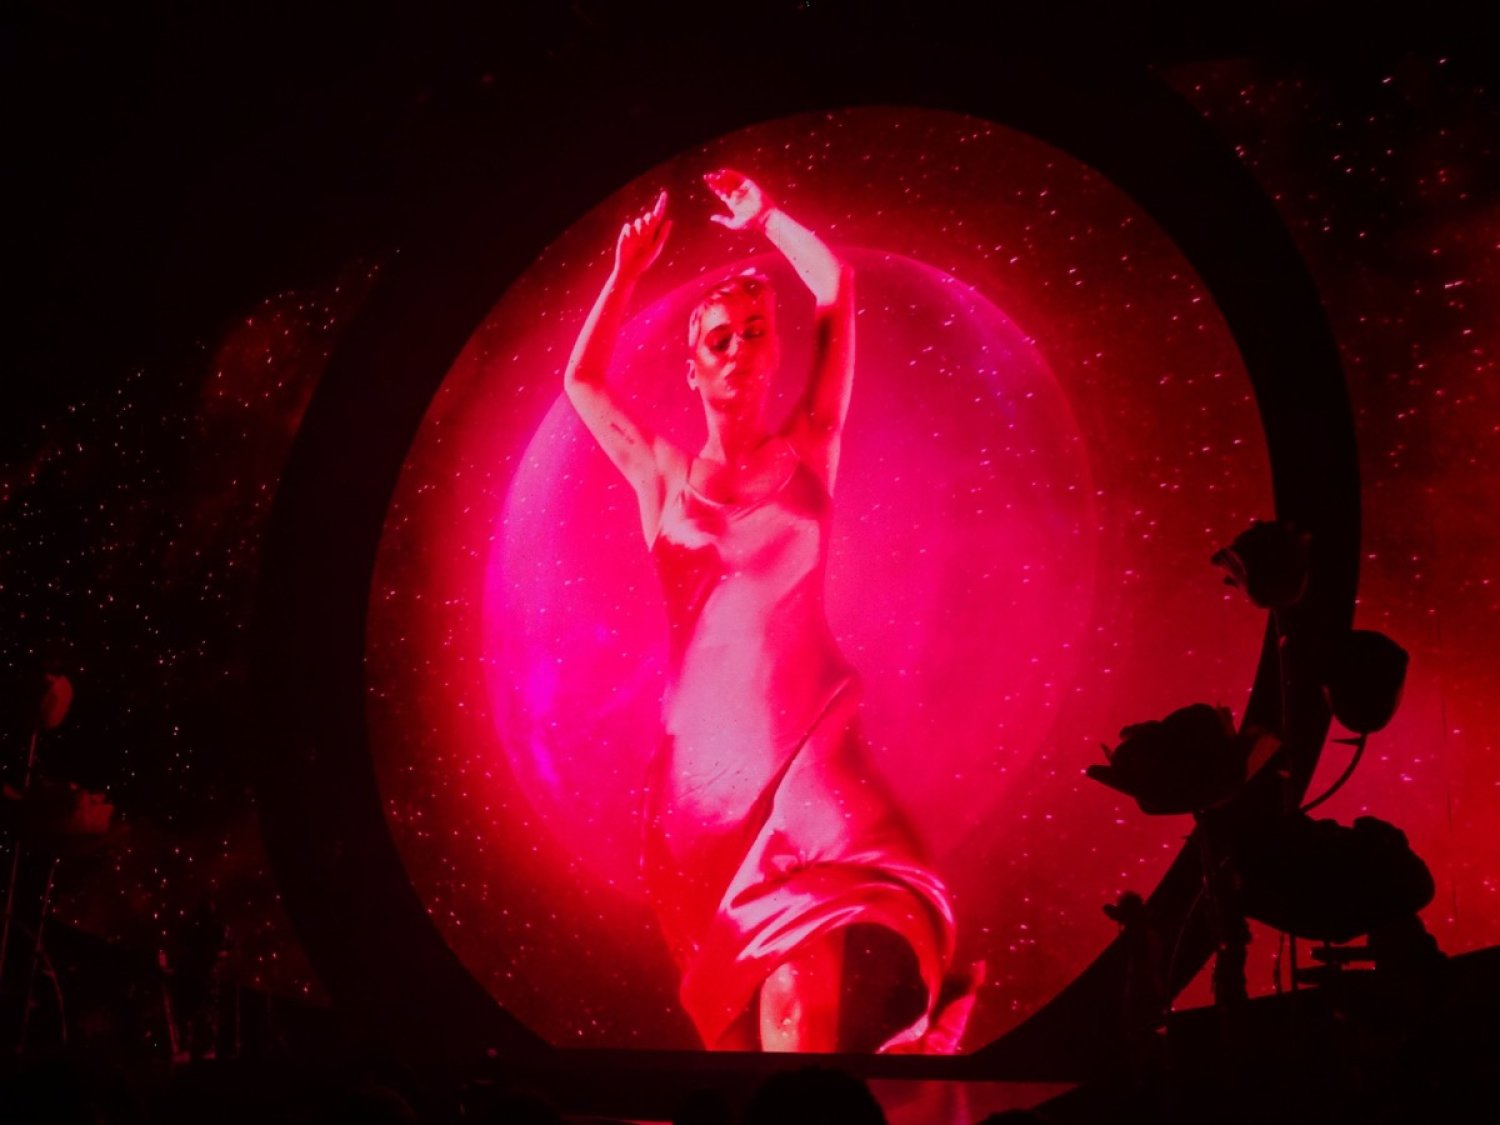 Katy Perry à l'AccorHotels Arena Bercy (Paris - 2018)